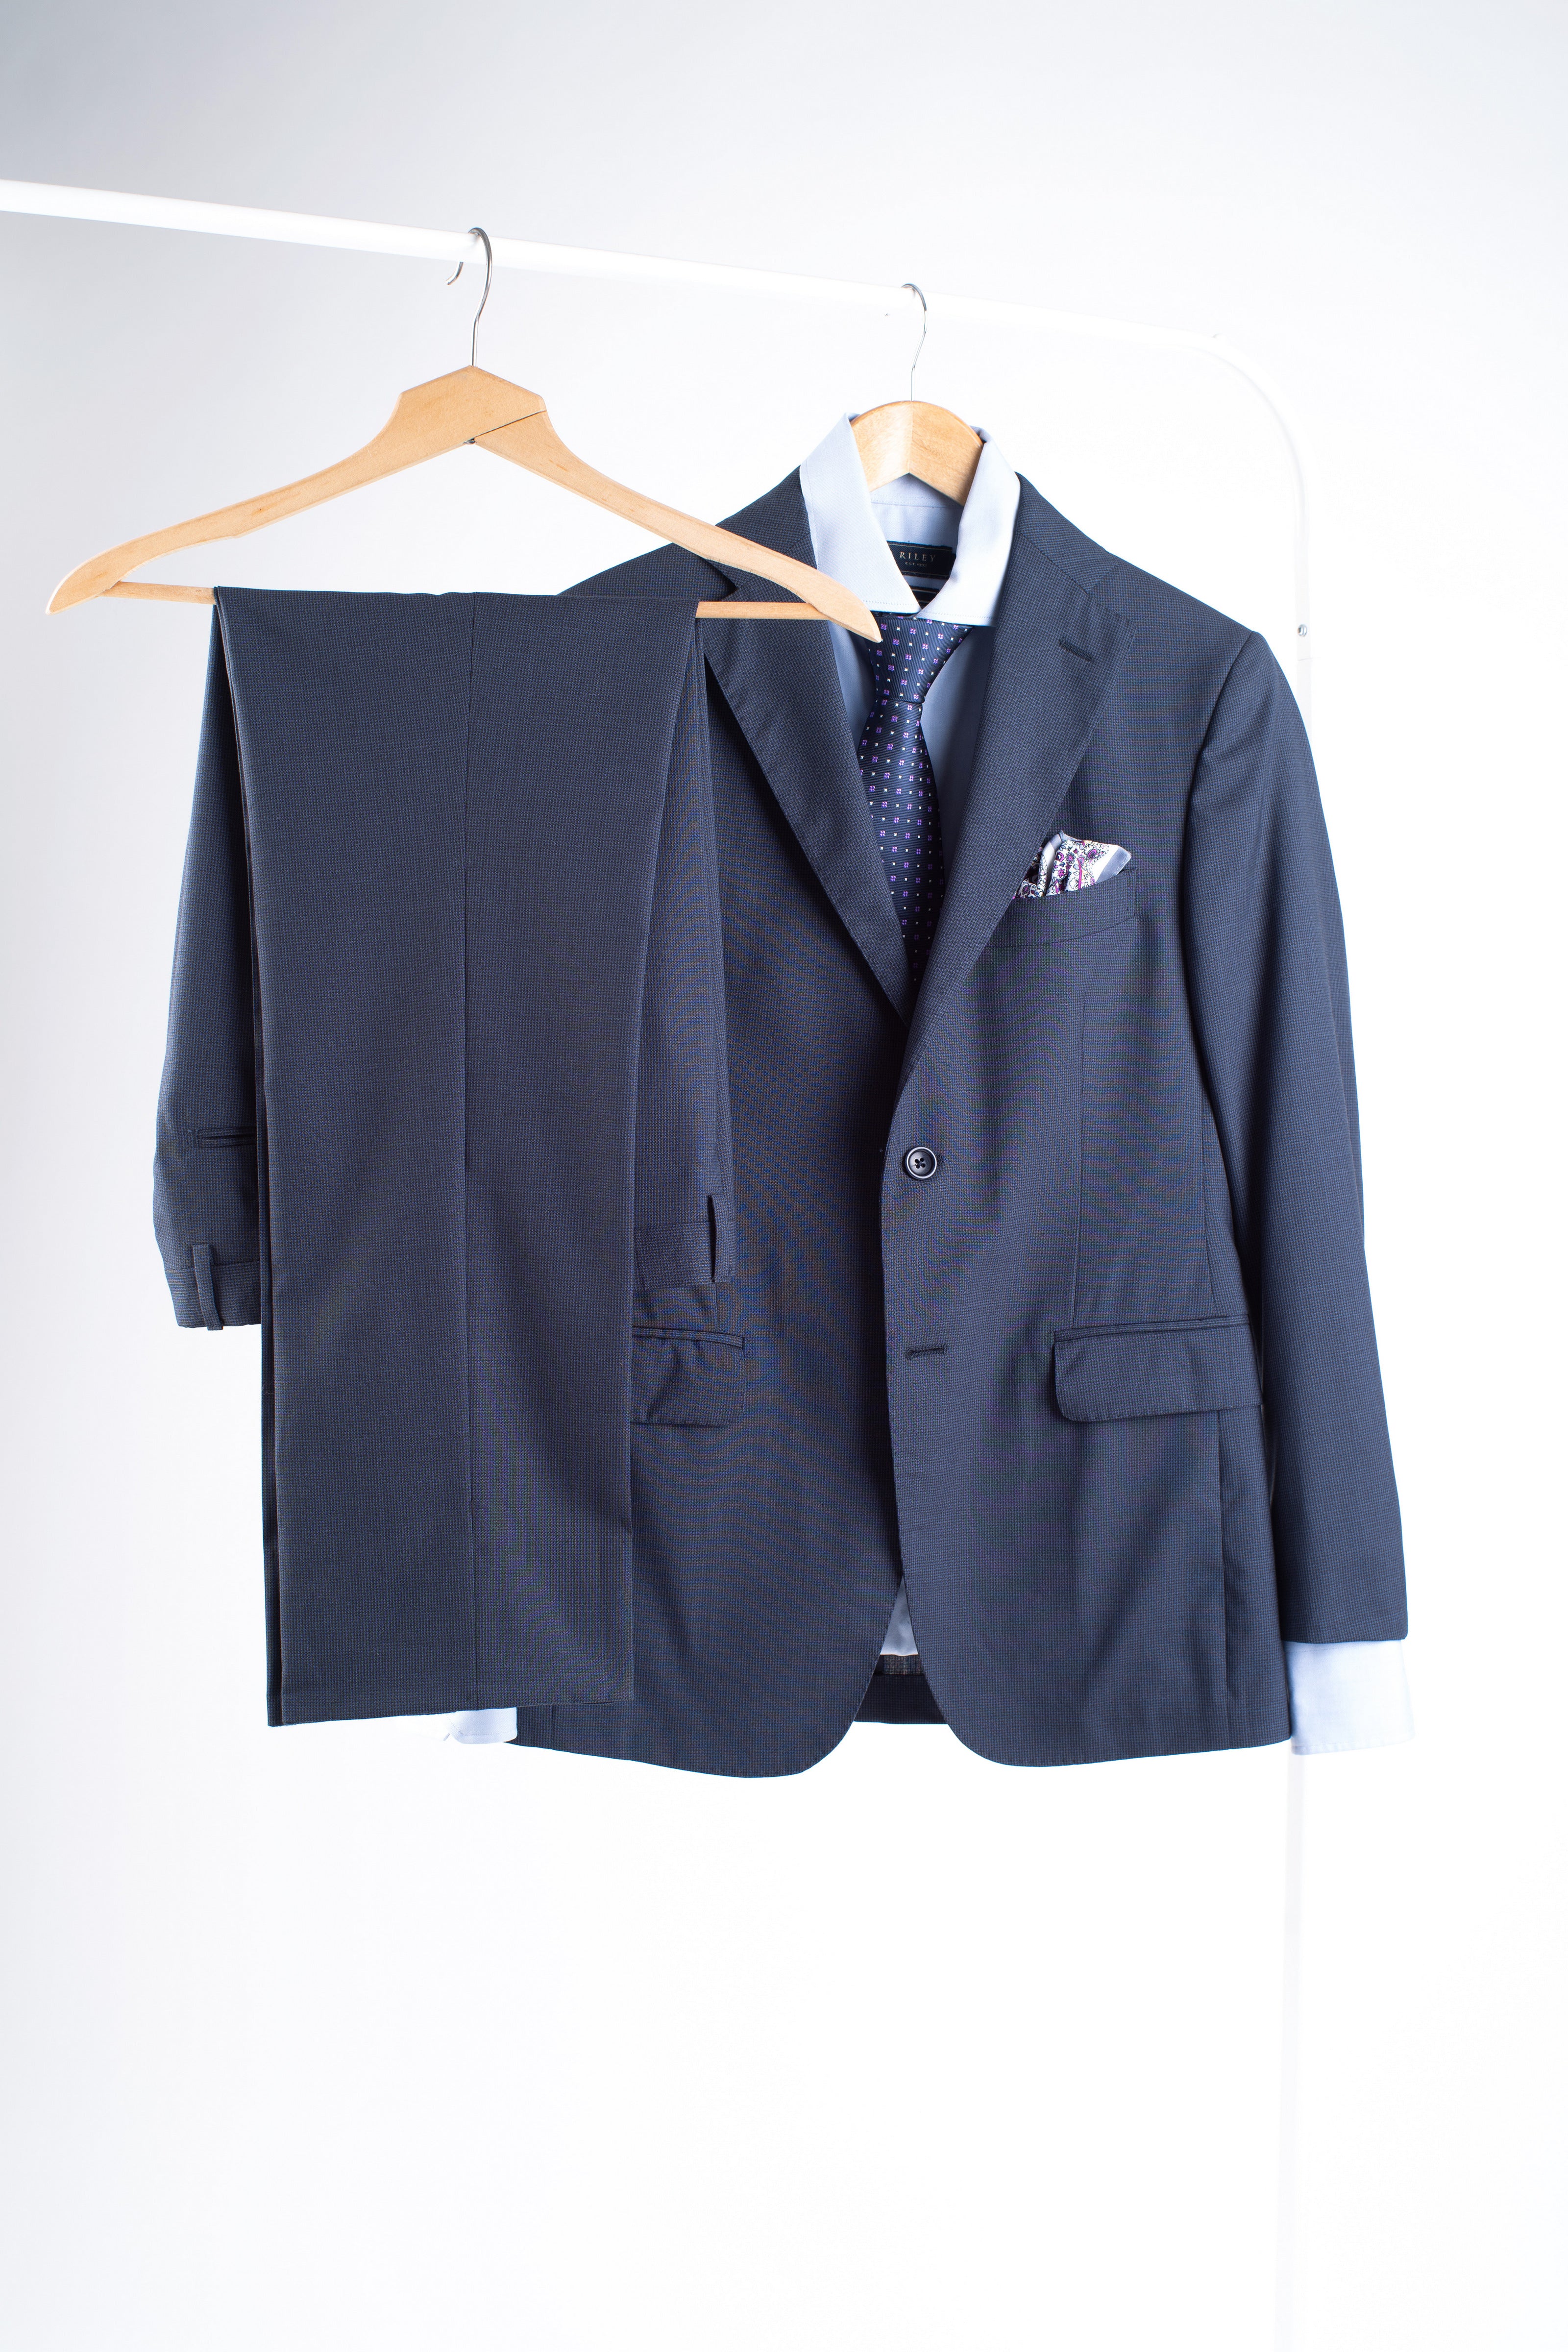 Boggi Summer Lightweight Blue 2 Pieces Suit, US 34R, EU 44R